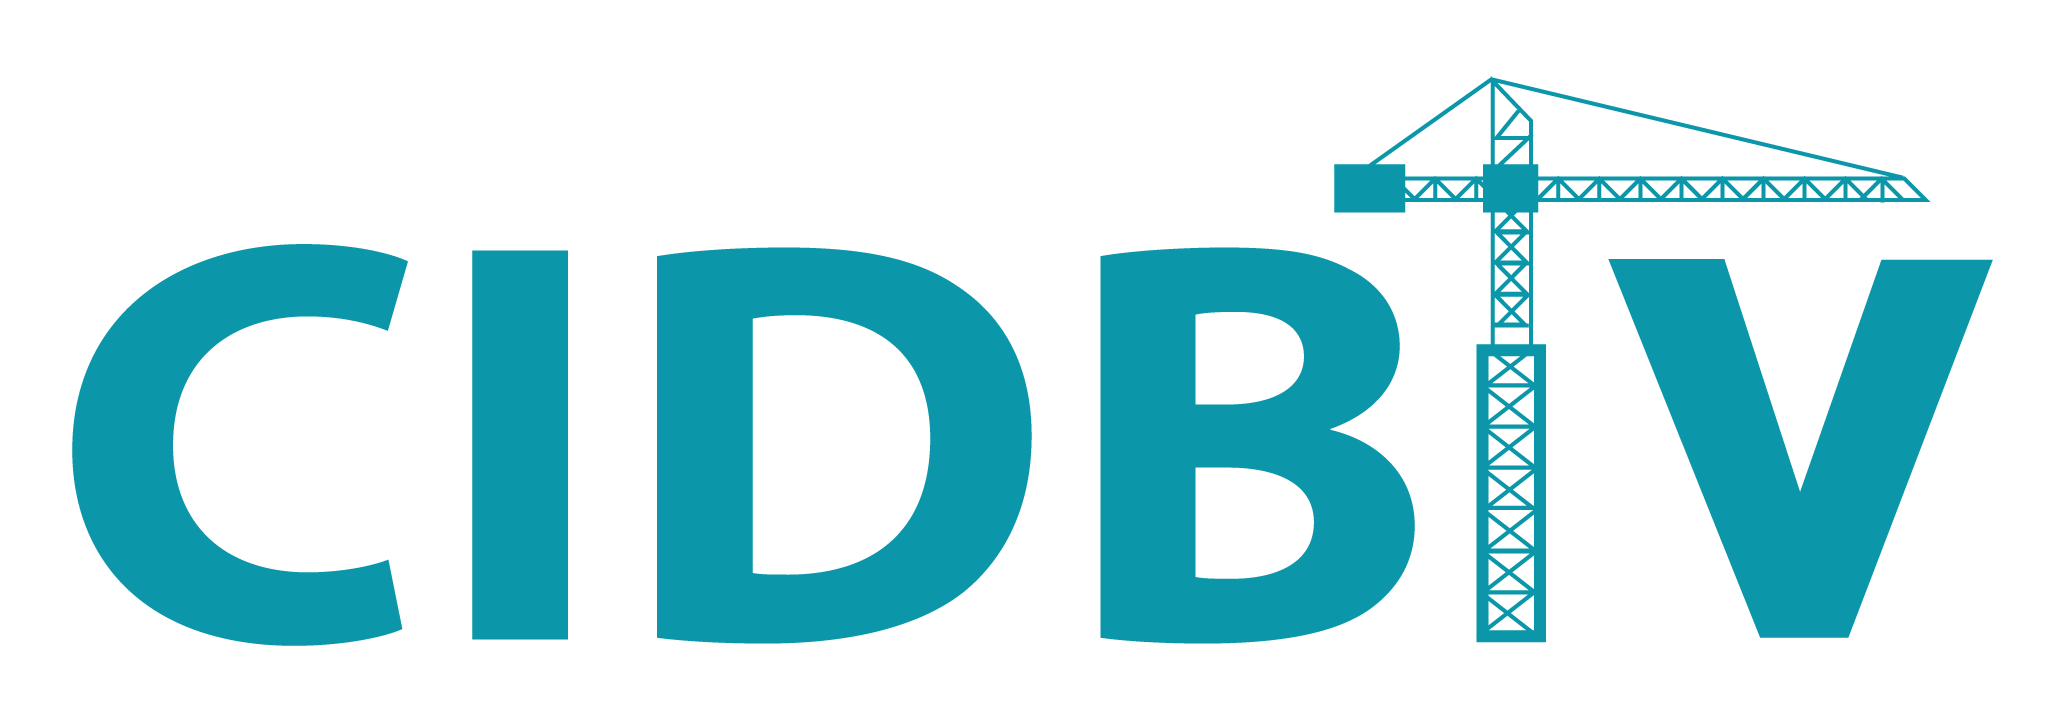 CIDB-TV-Logo-Youtube